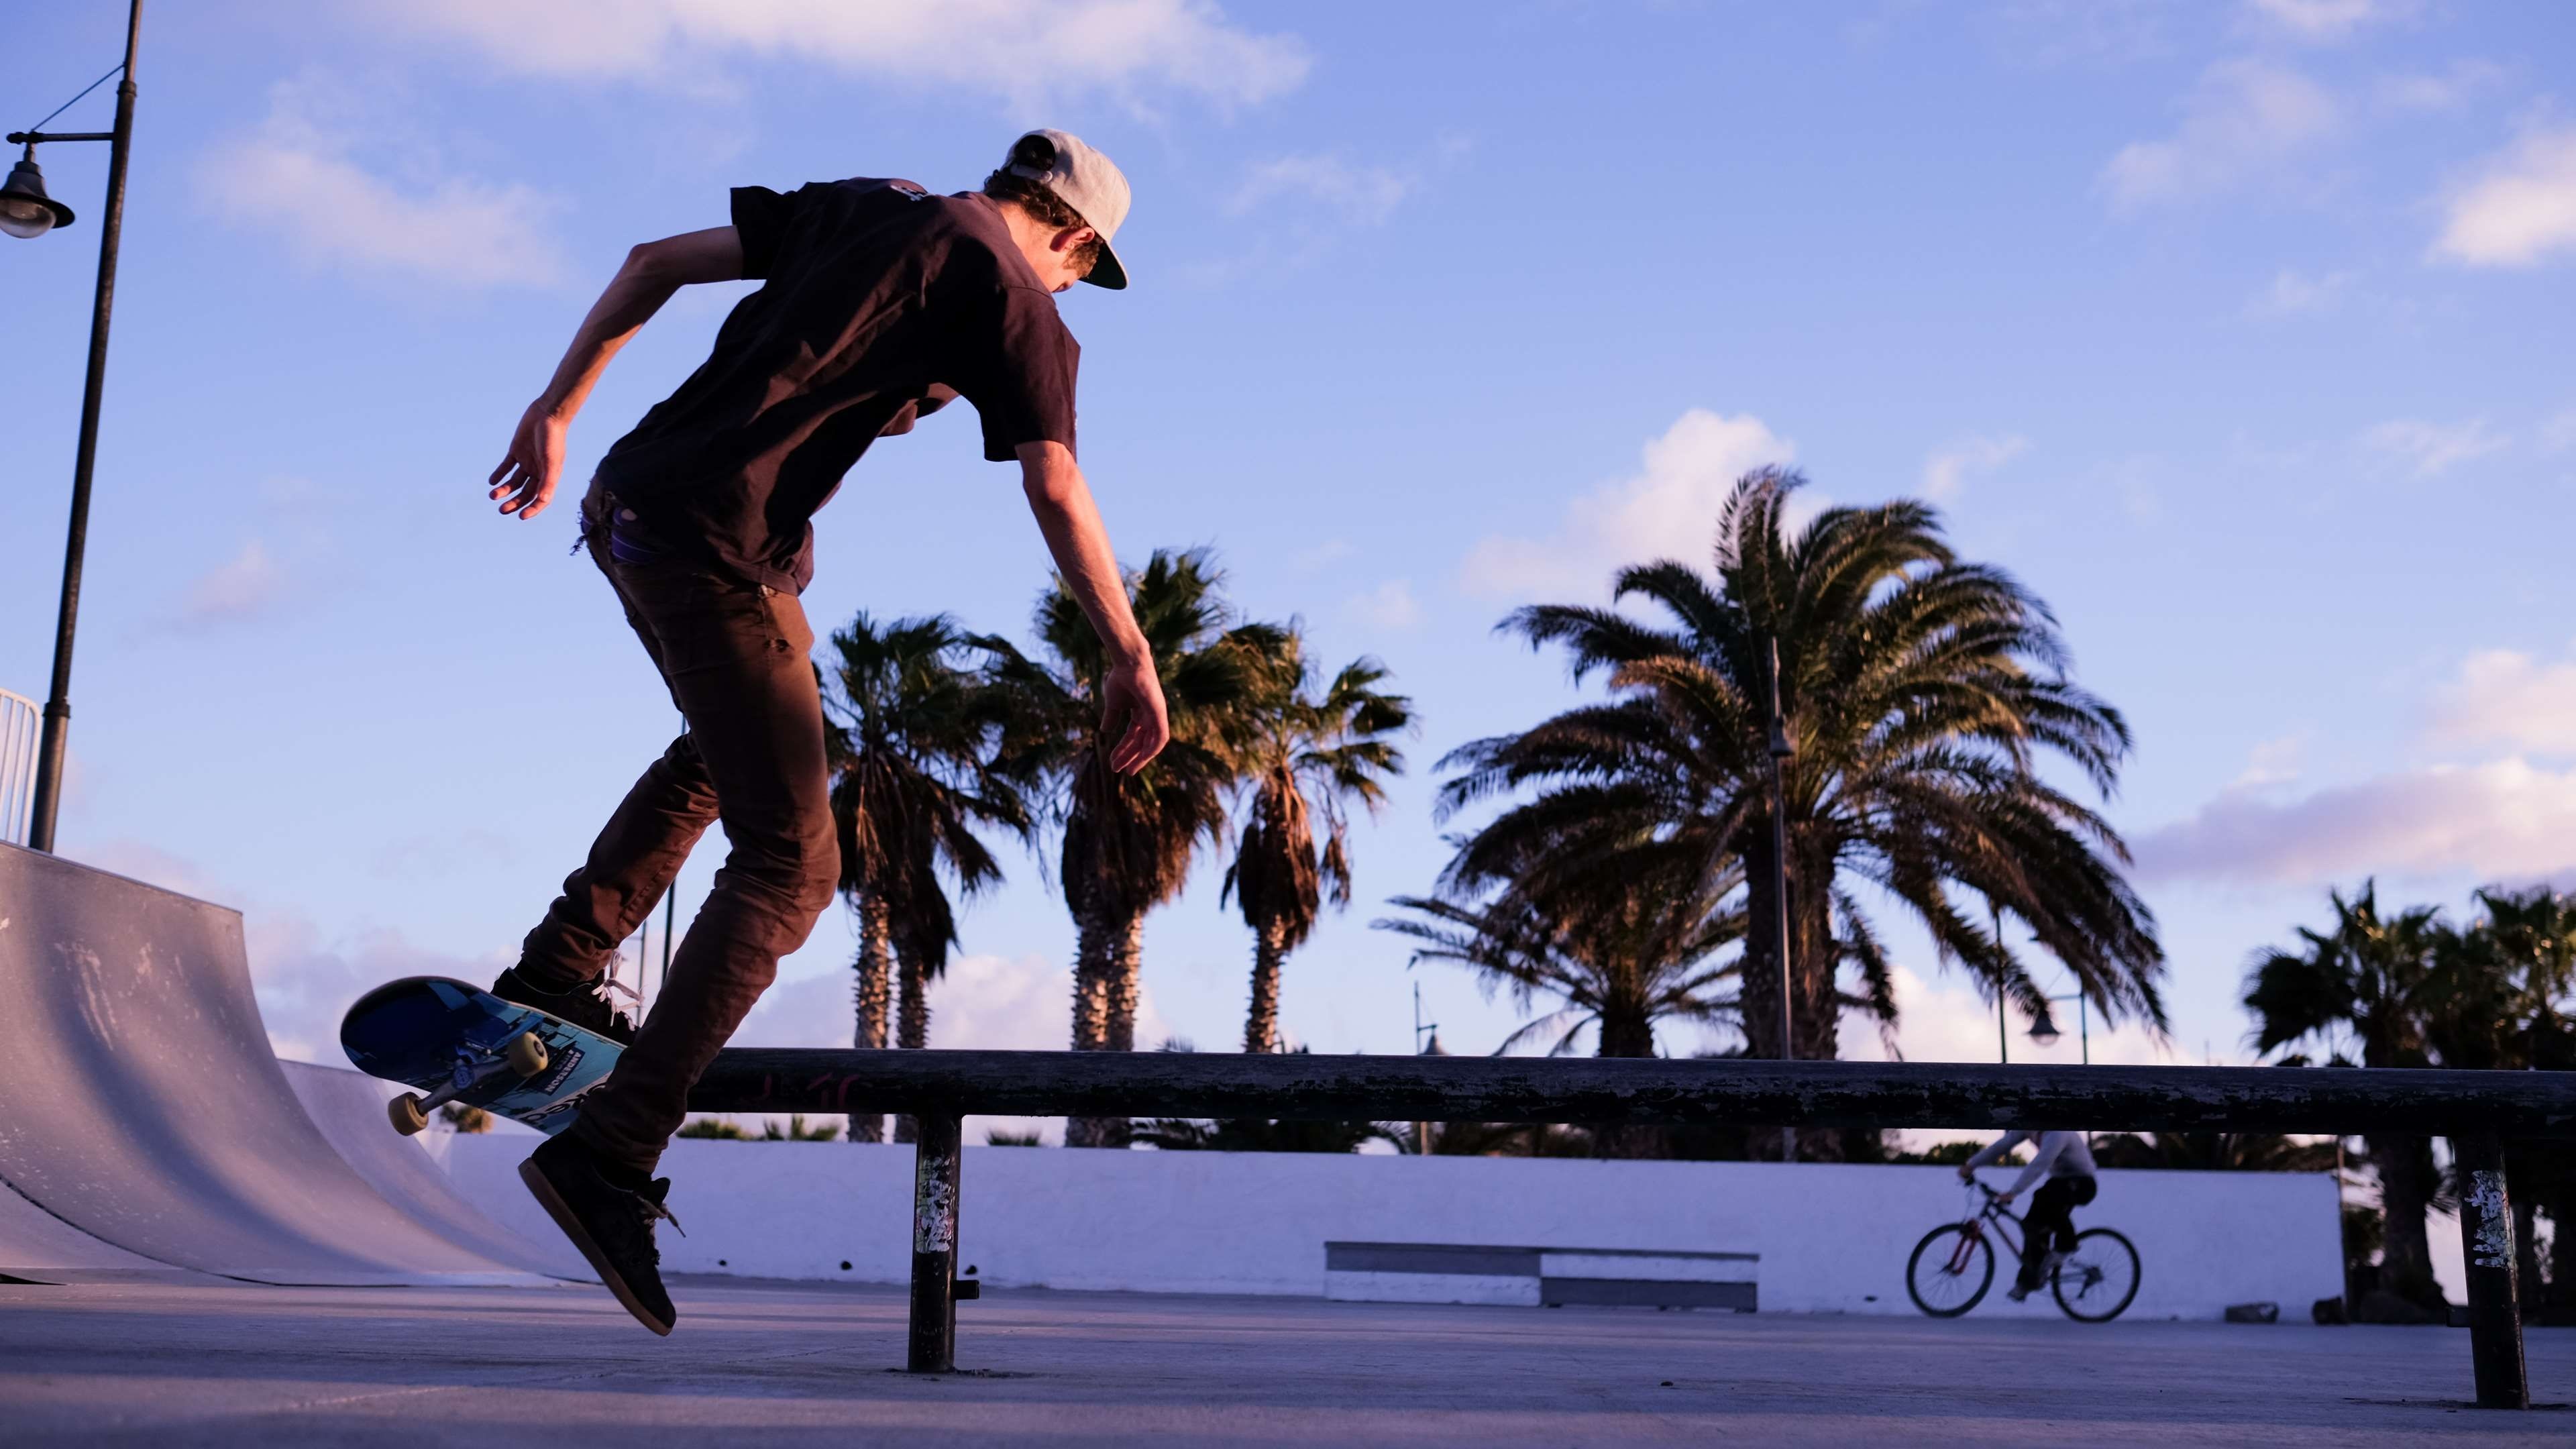 Skateboarding: Skater doing a kickflip in a ramp skating park, Street sport. 3840x2160 4K Background.